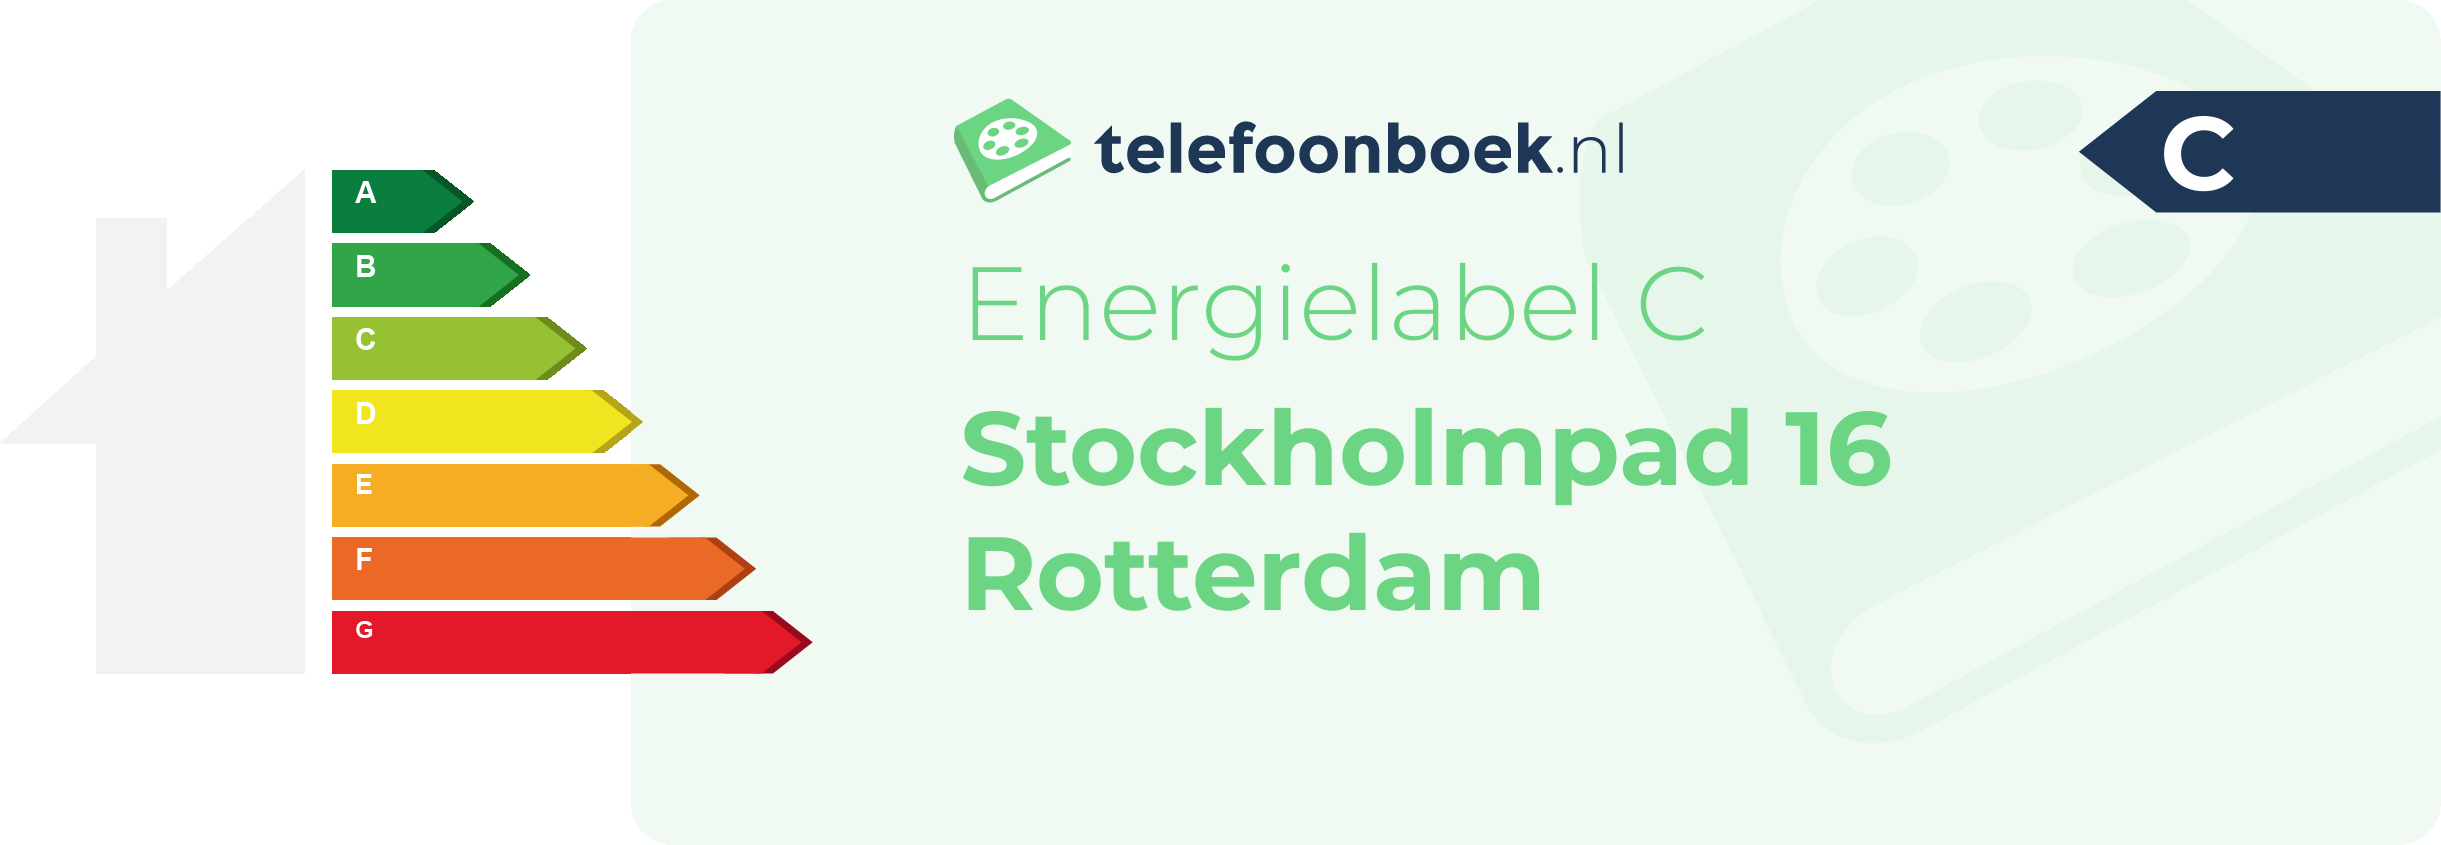 Energielabel Stockholmpad 16 Rotterdam